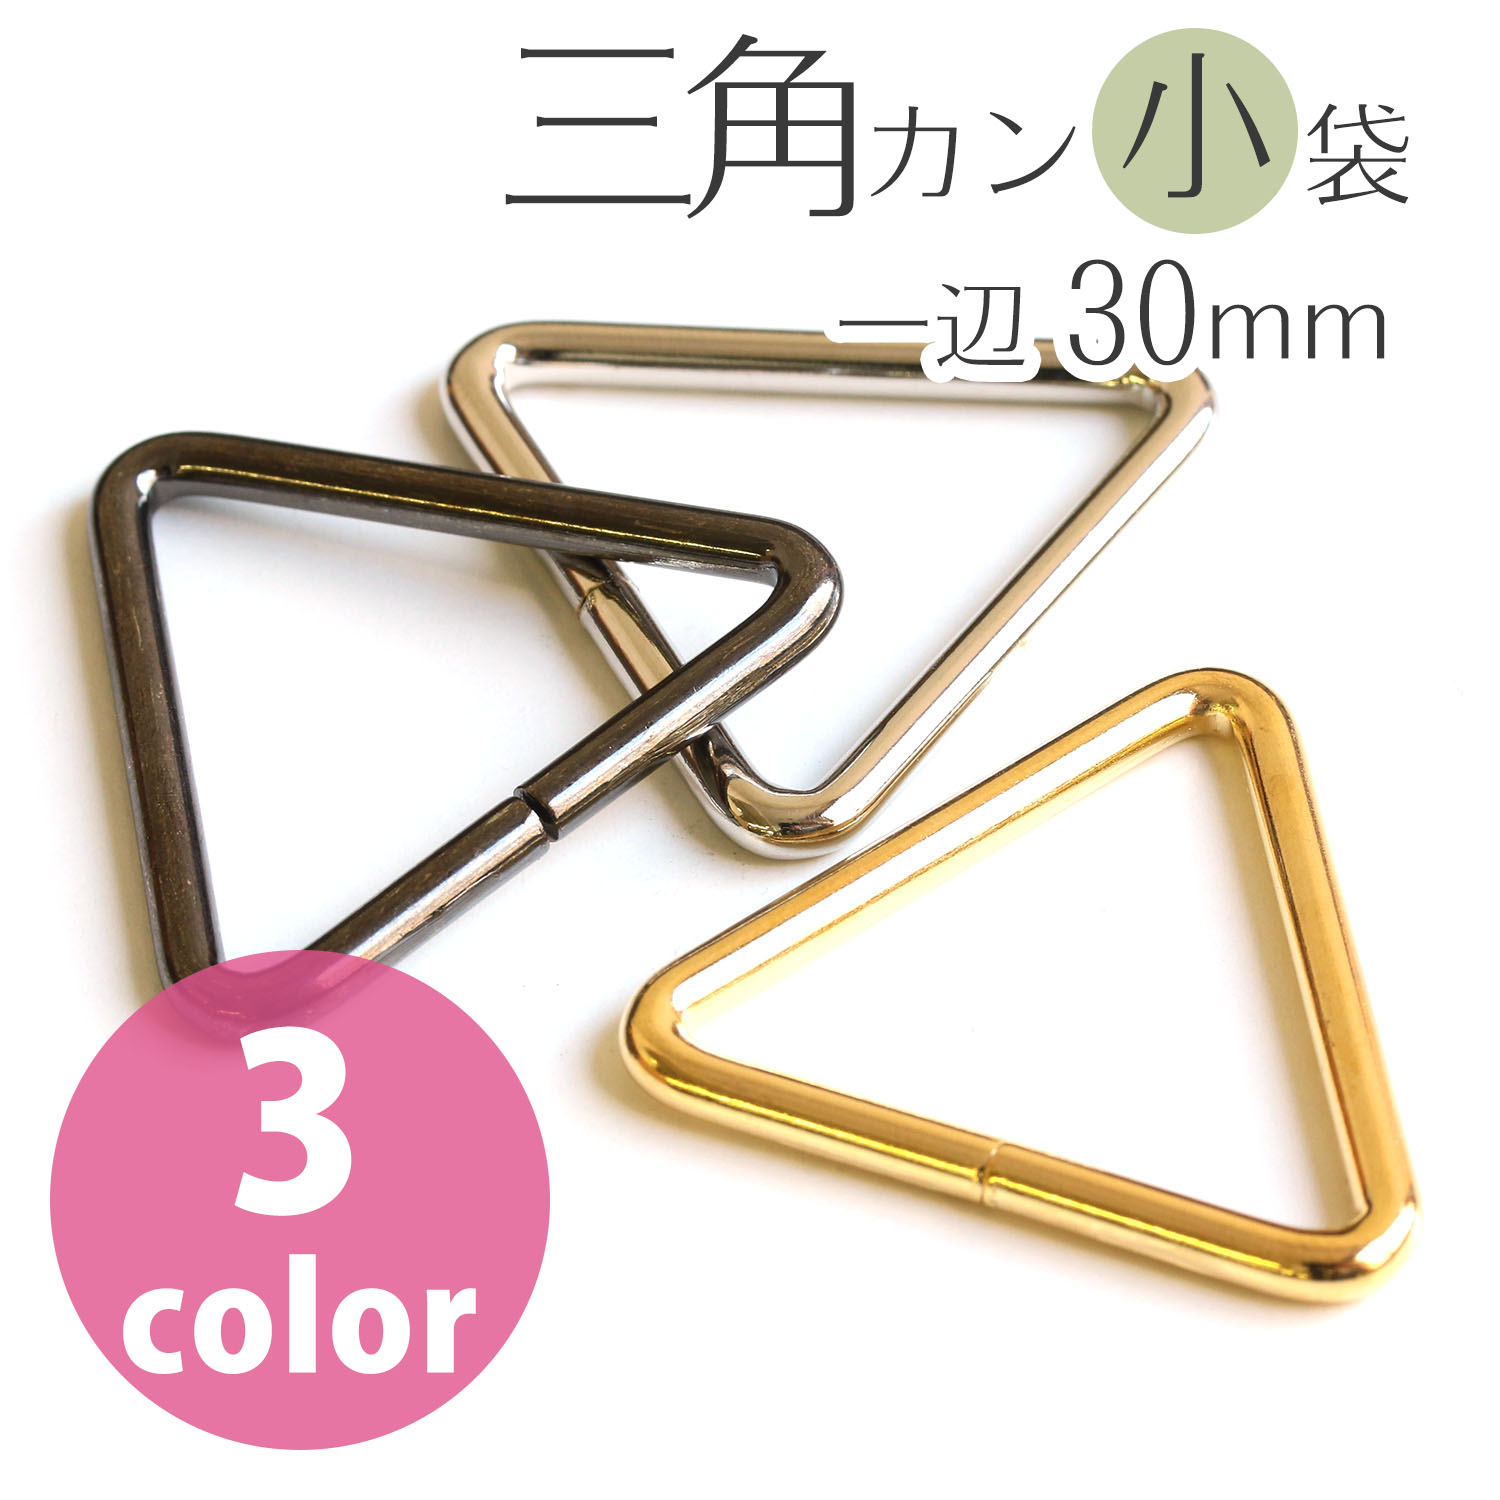 Triangular Ring 30mm (bag)